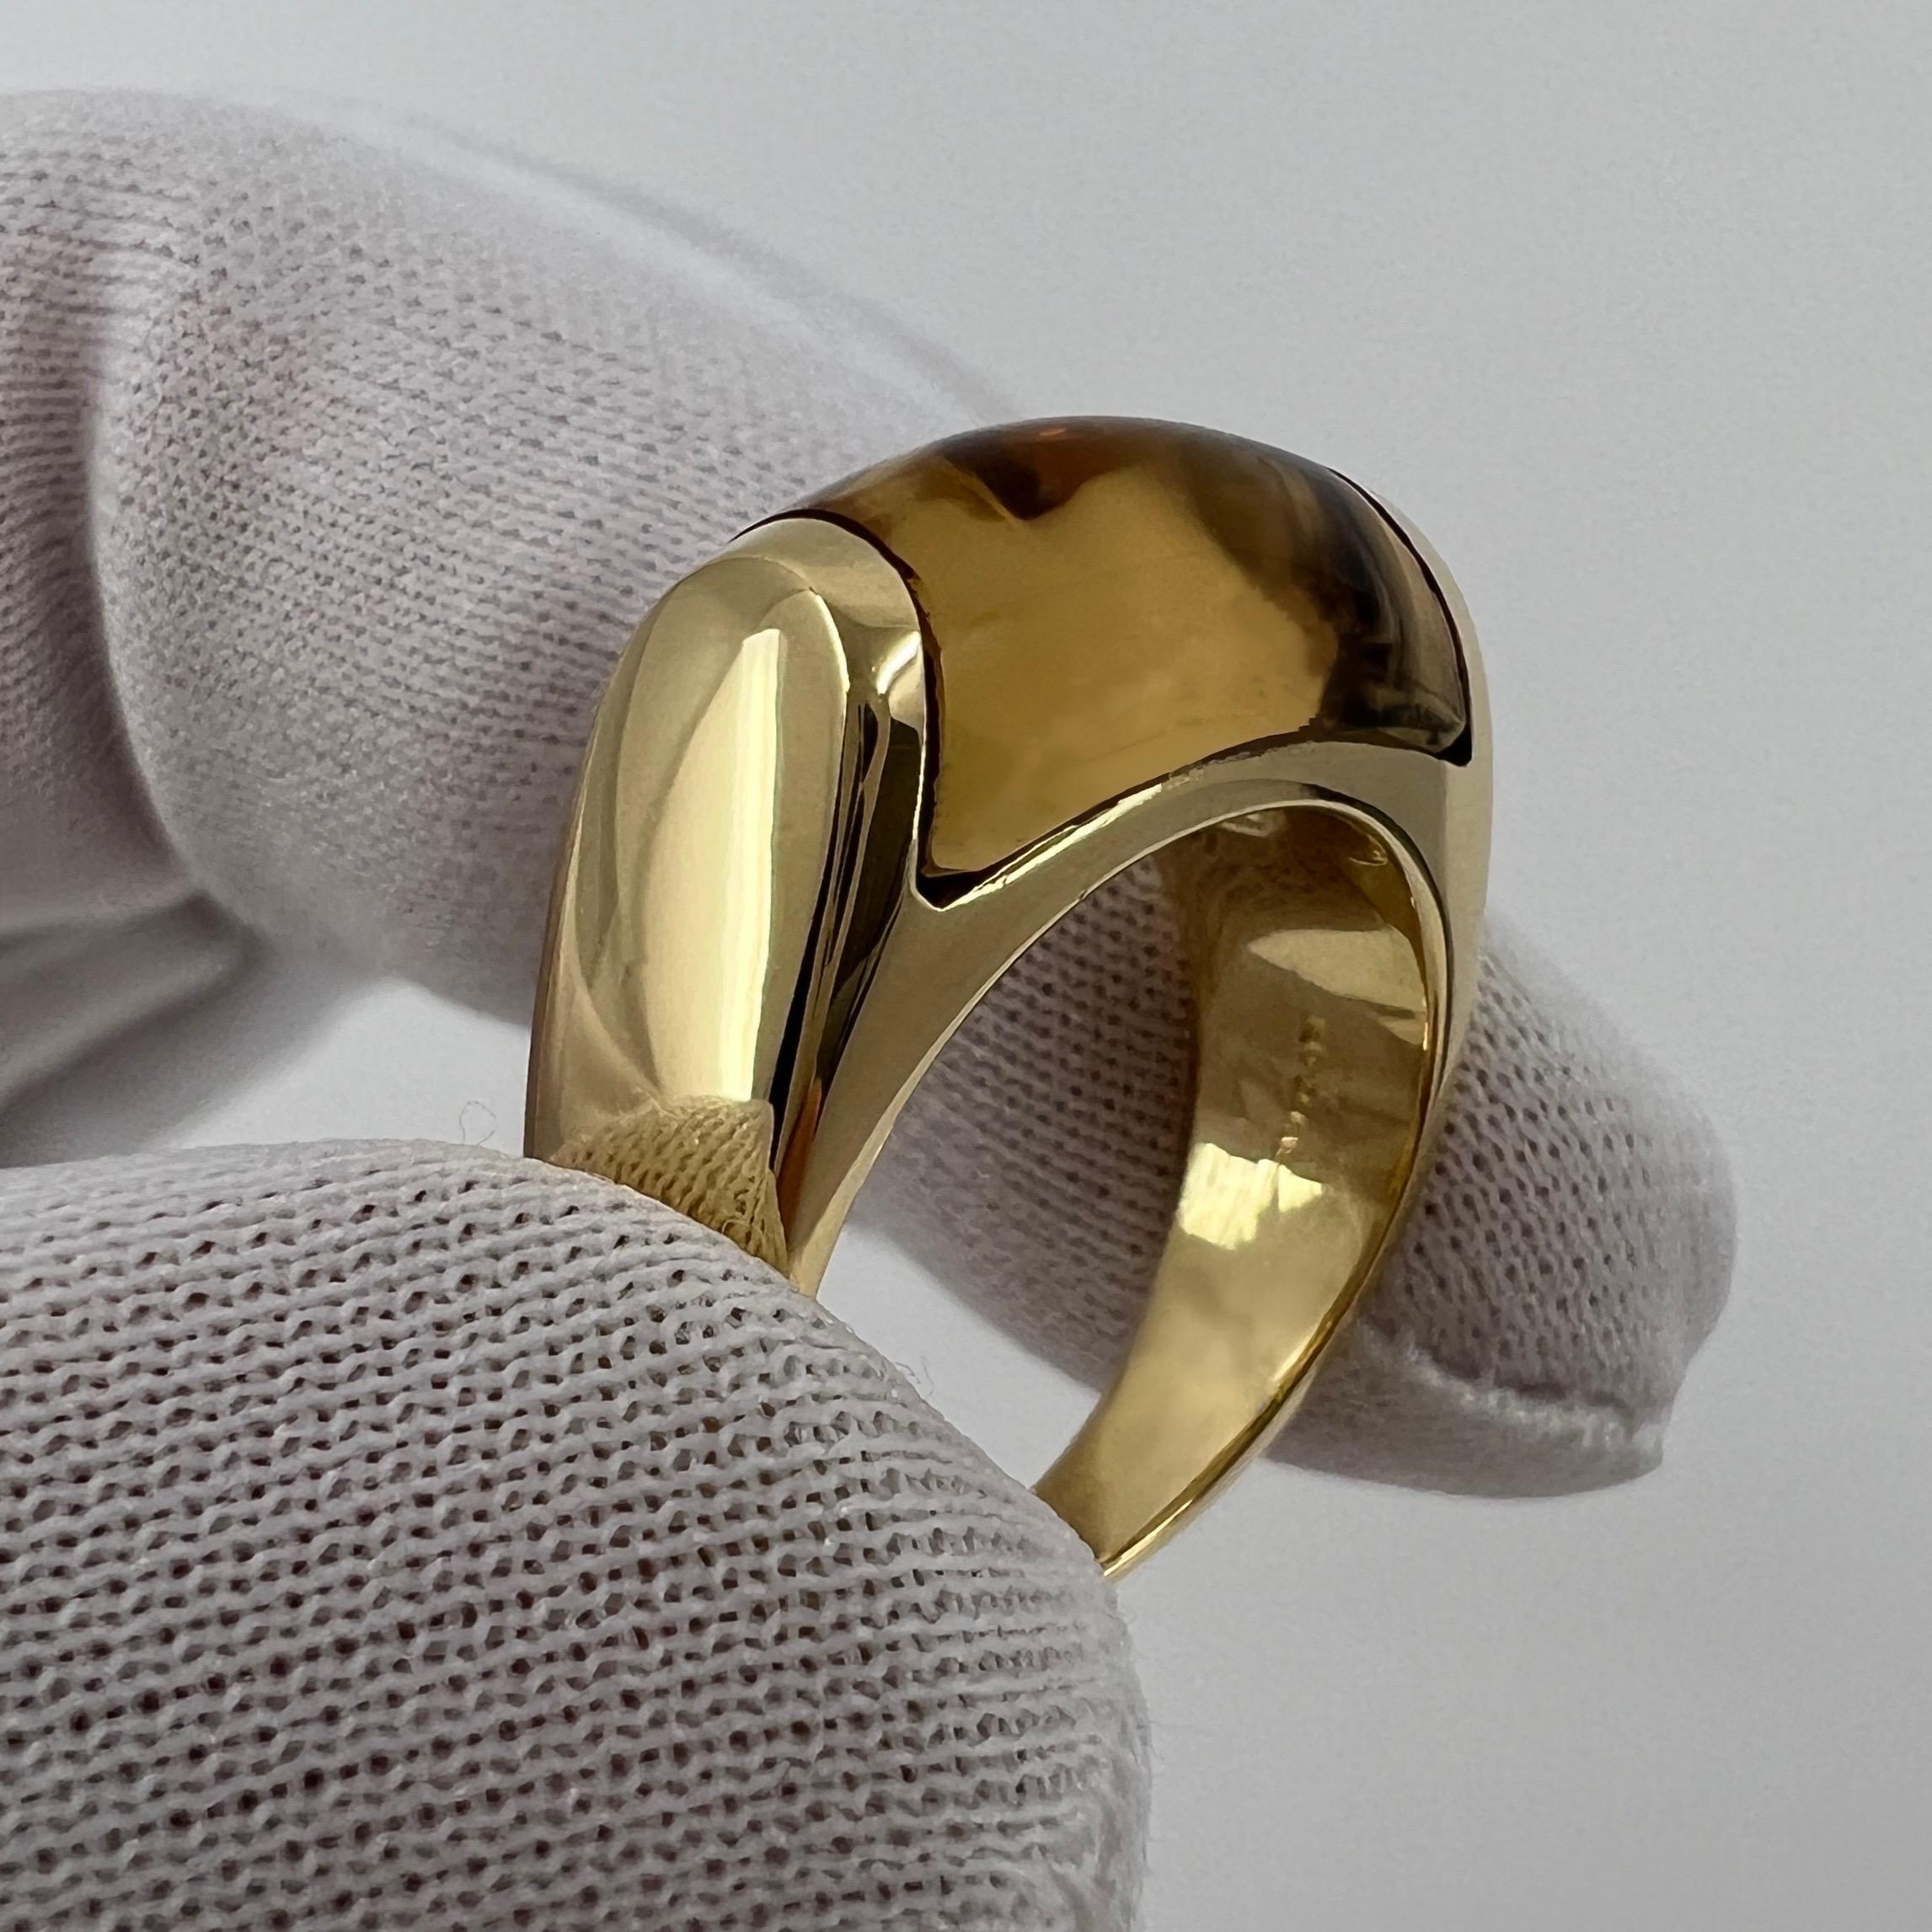 Women's or Men's Rare Bvlgari Bulgari Tronchetto 18k Yellow Gold Yellow Citrine Ring with Box For Sale